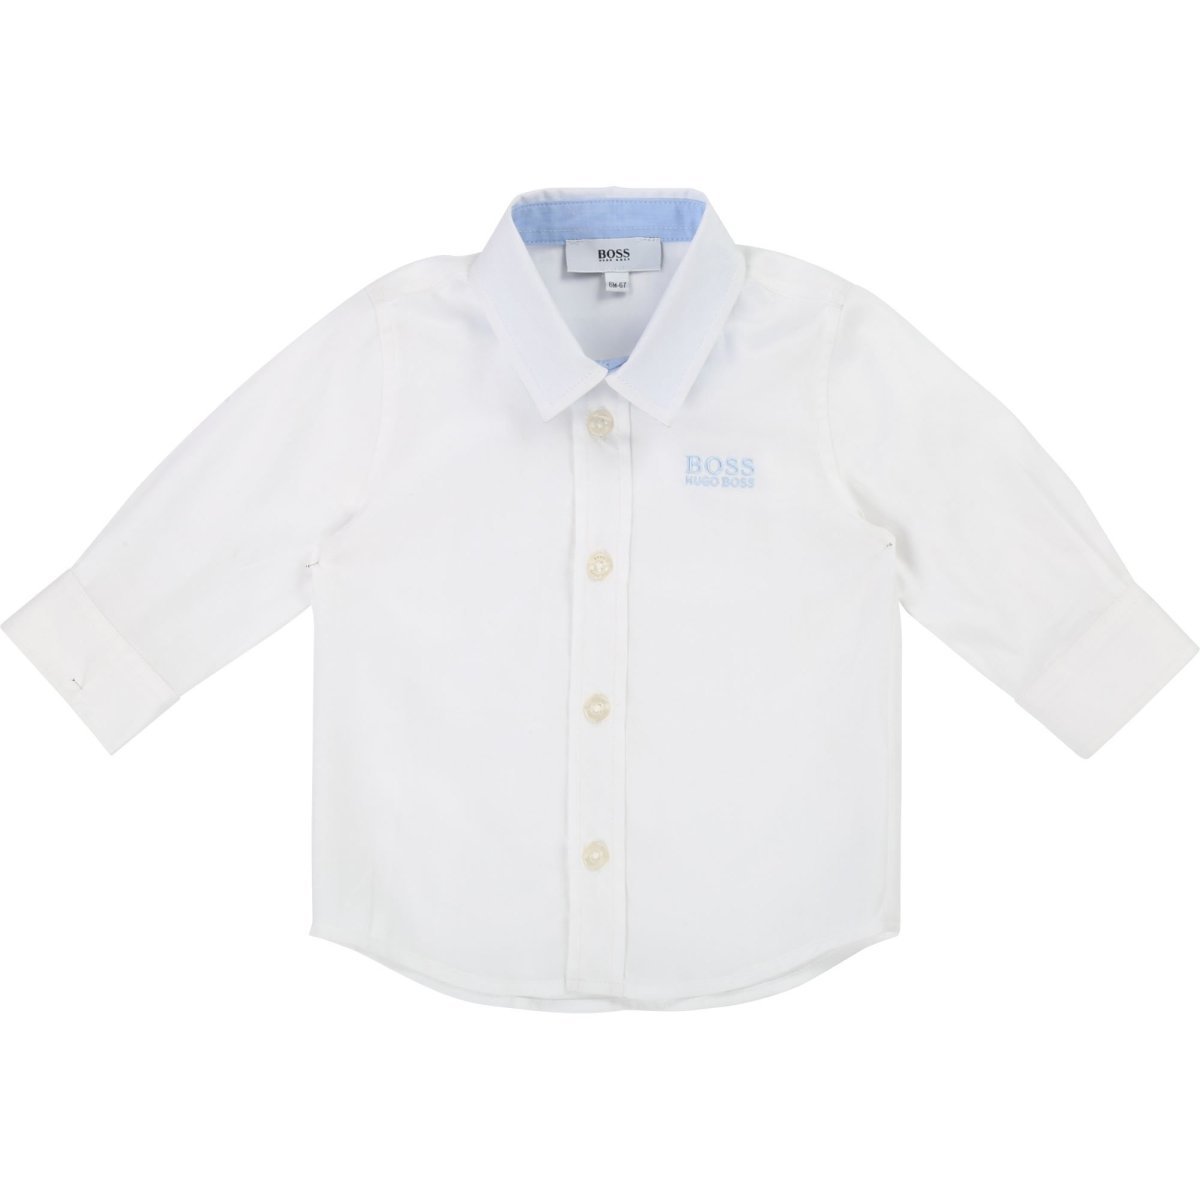 Hugo Boss Toddler Long Sleeve White Dress Shirt J05P05 Dress Shirts Hugo Boss 